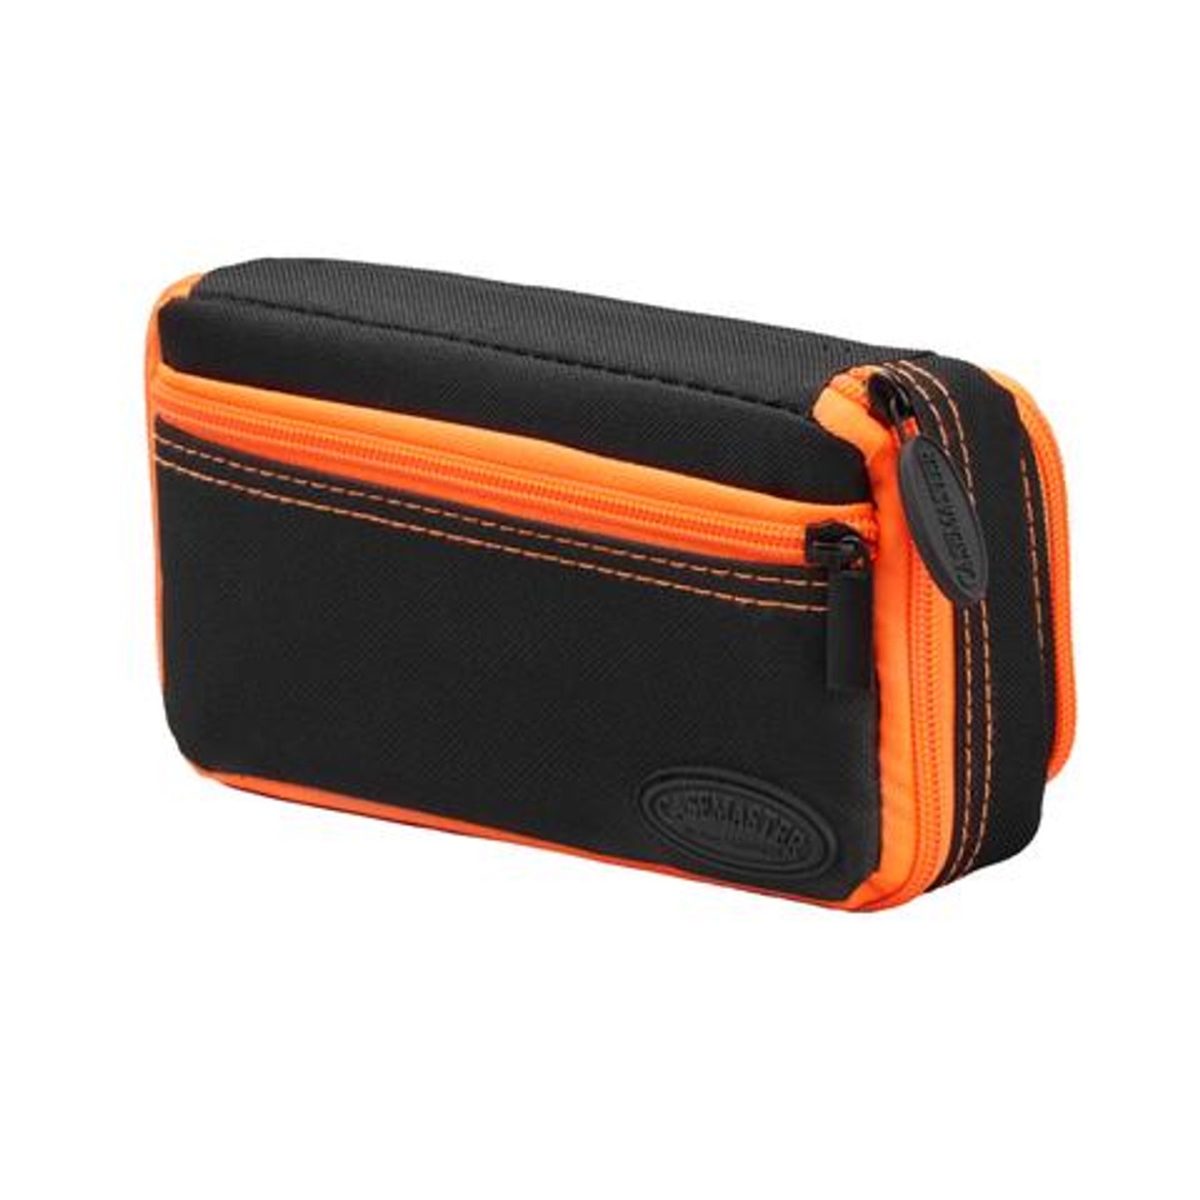 Picture of Casemaster 36-0701-09 Plazma Plus Dart Case with Zipper & Phone Pocket&#44; Black & Orange - 3 Darts